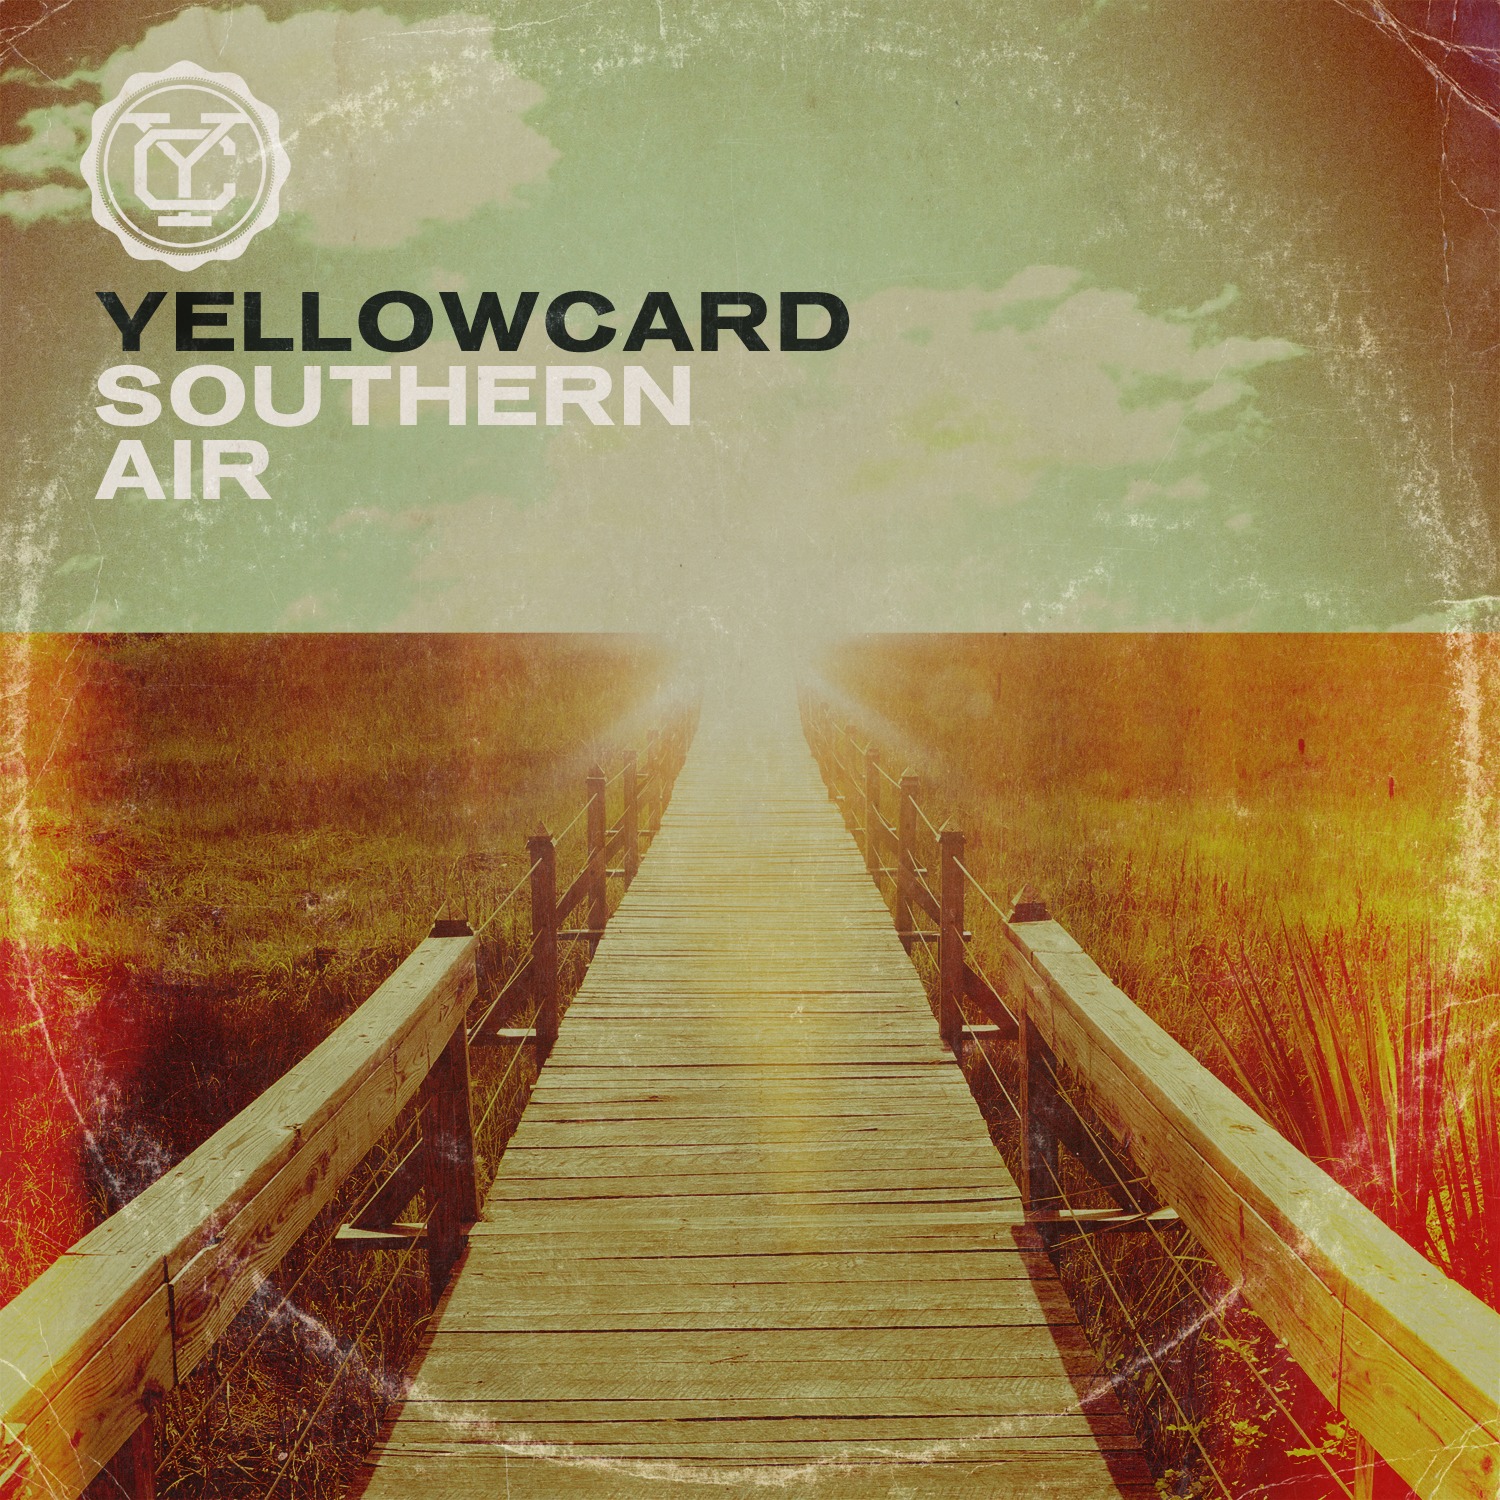 tay jardine yellowcard - Yellowcard - Southern Air (2012) YC SouthernAir artwork11